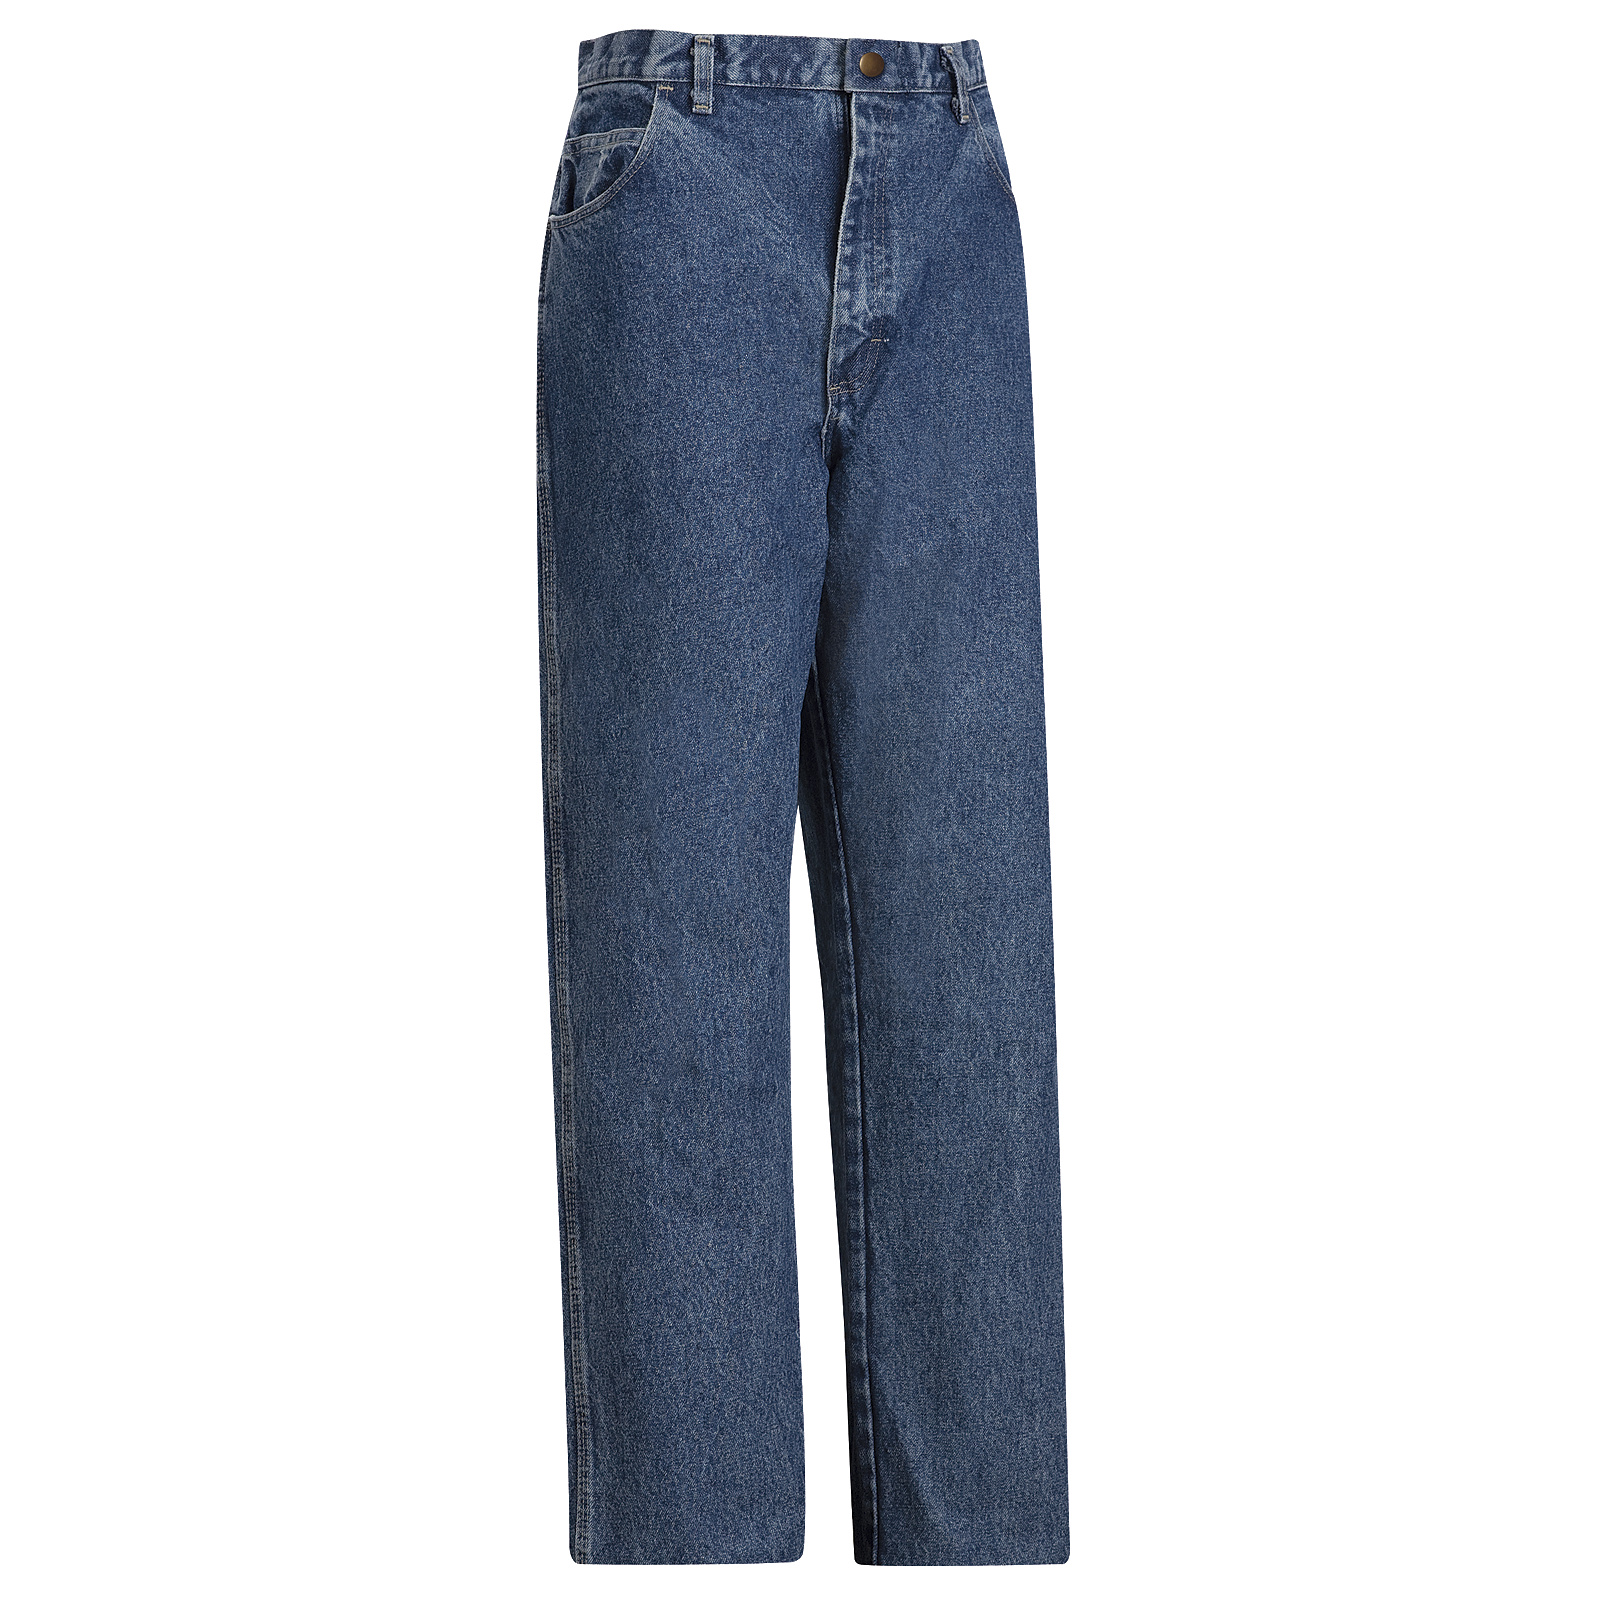 Bulwark Men's Flame Resistant Work Jeans